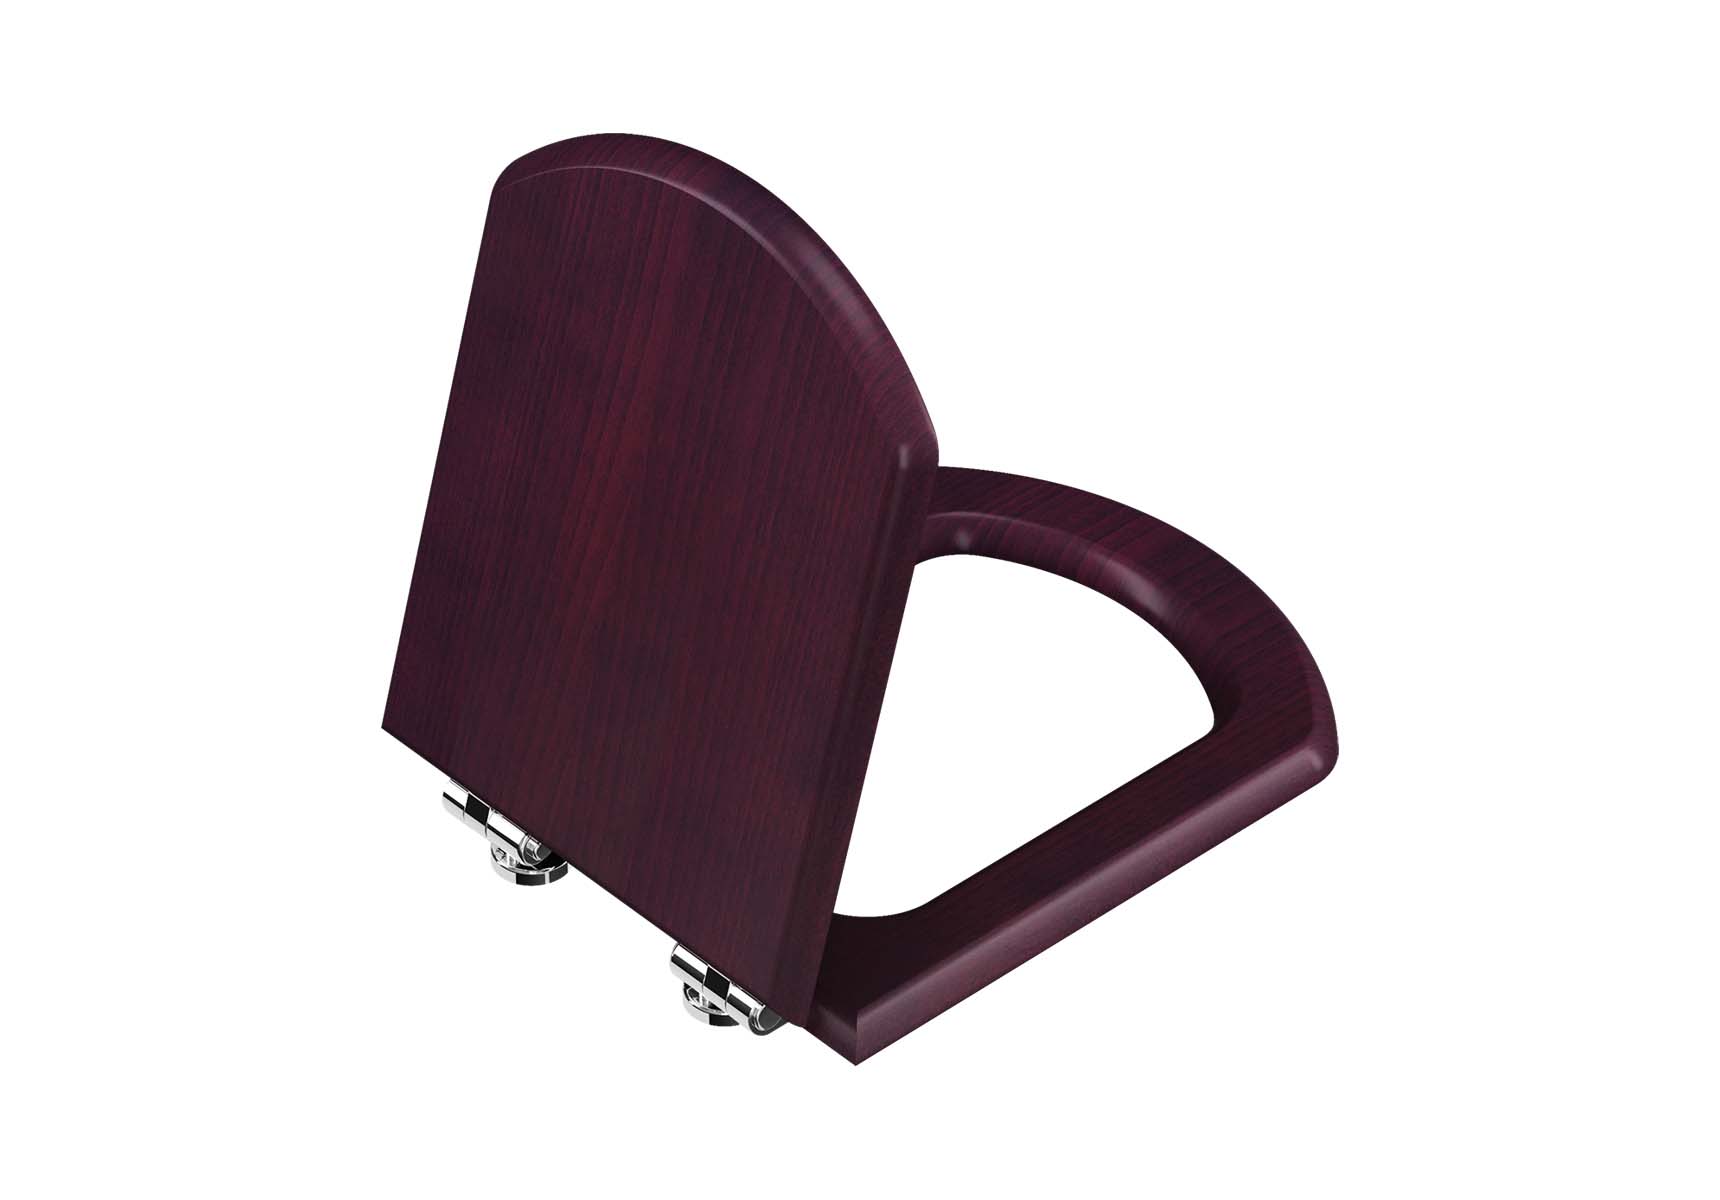 Wooden Seat, Soft-Close, Detachable Metal Hinge, Top Fixing